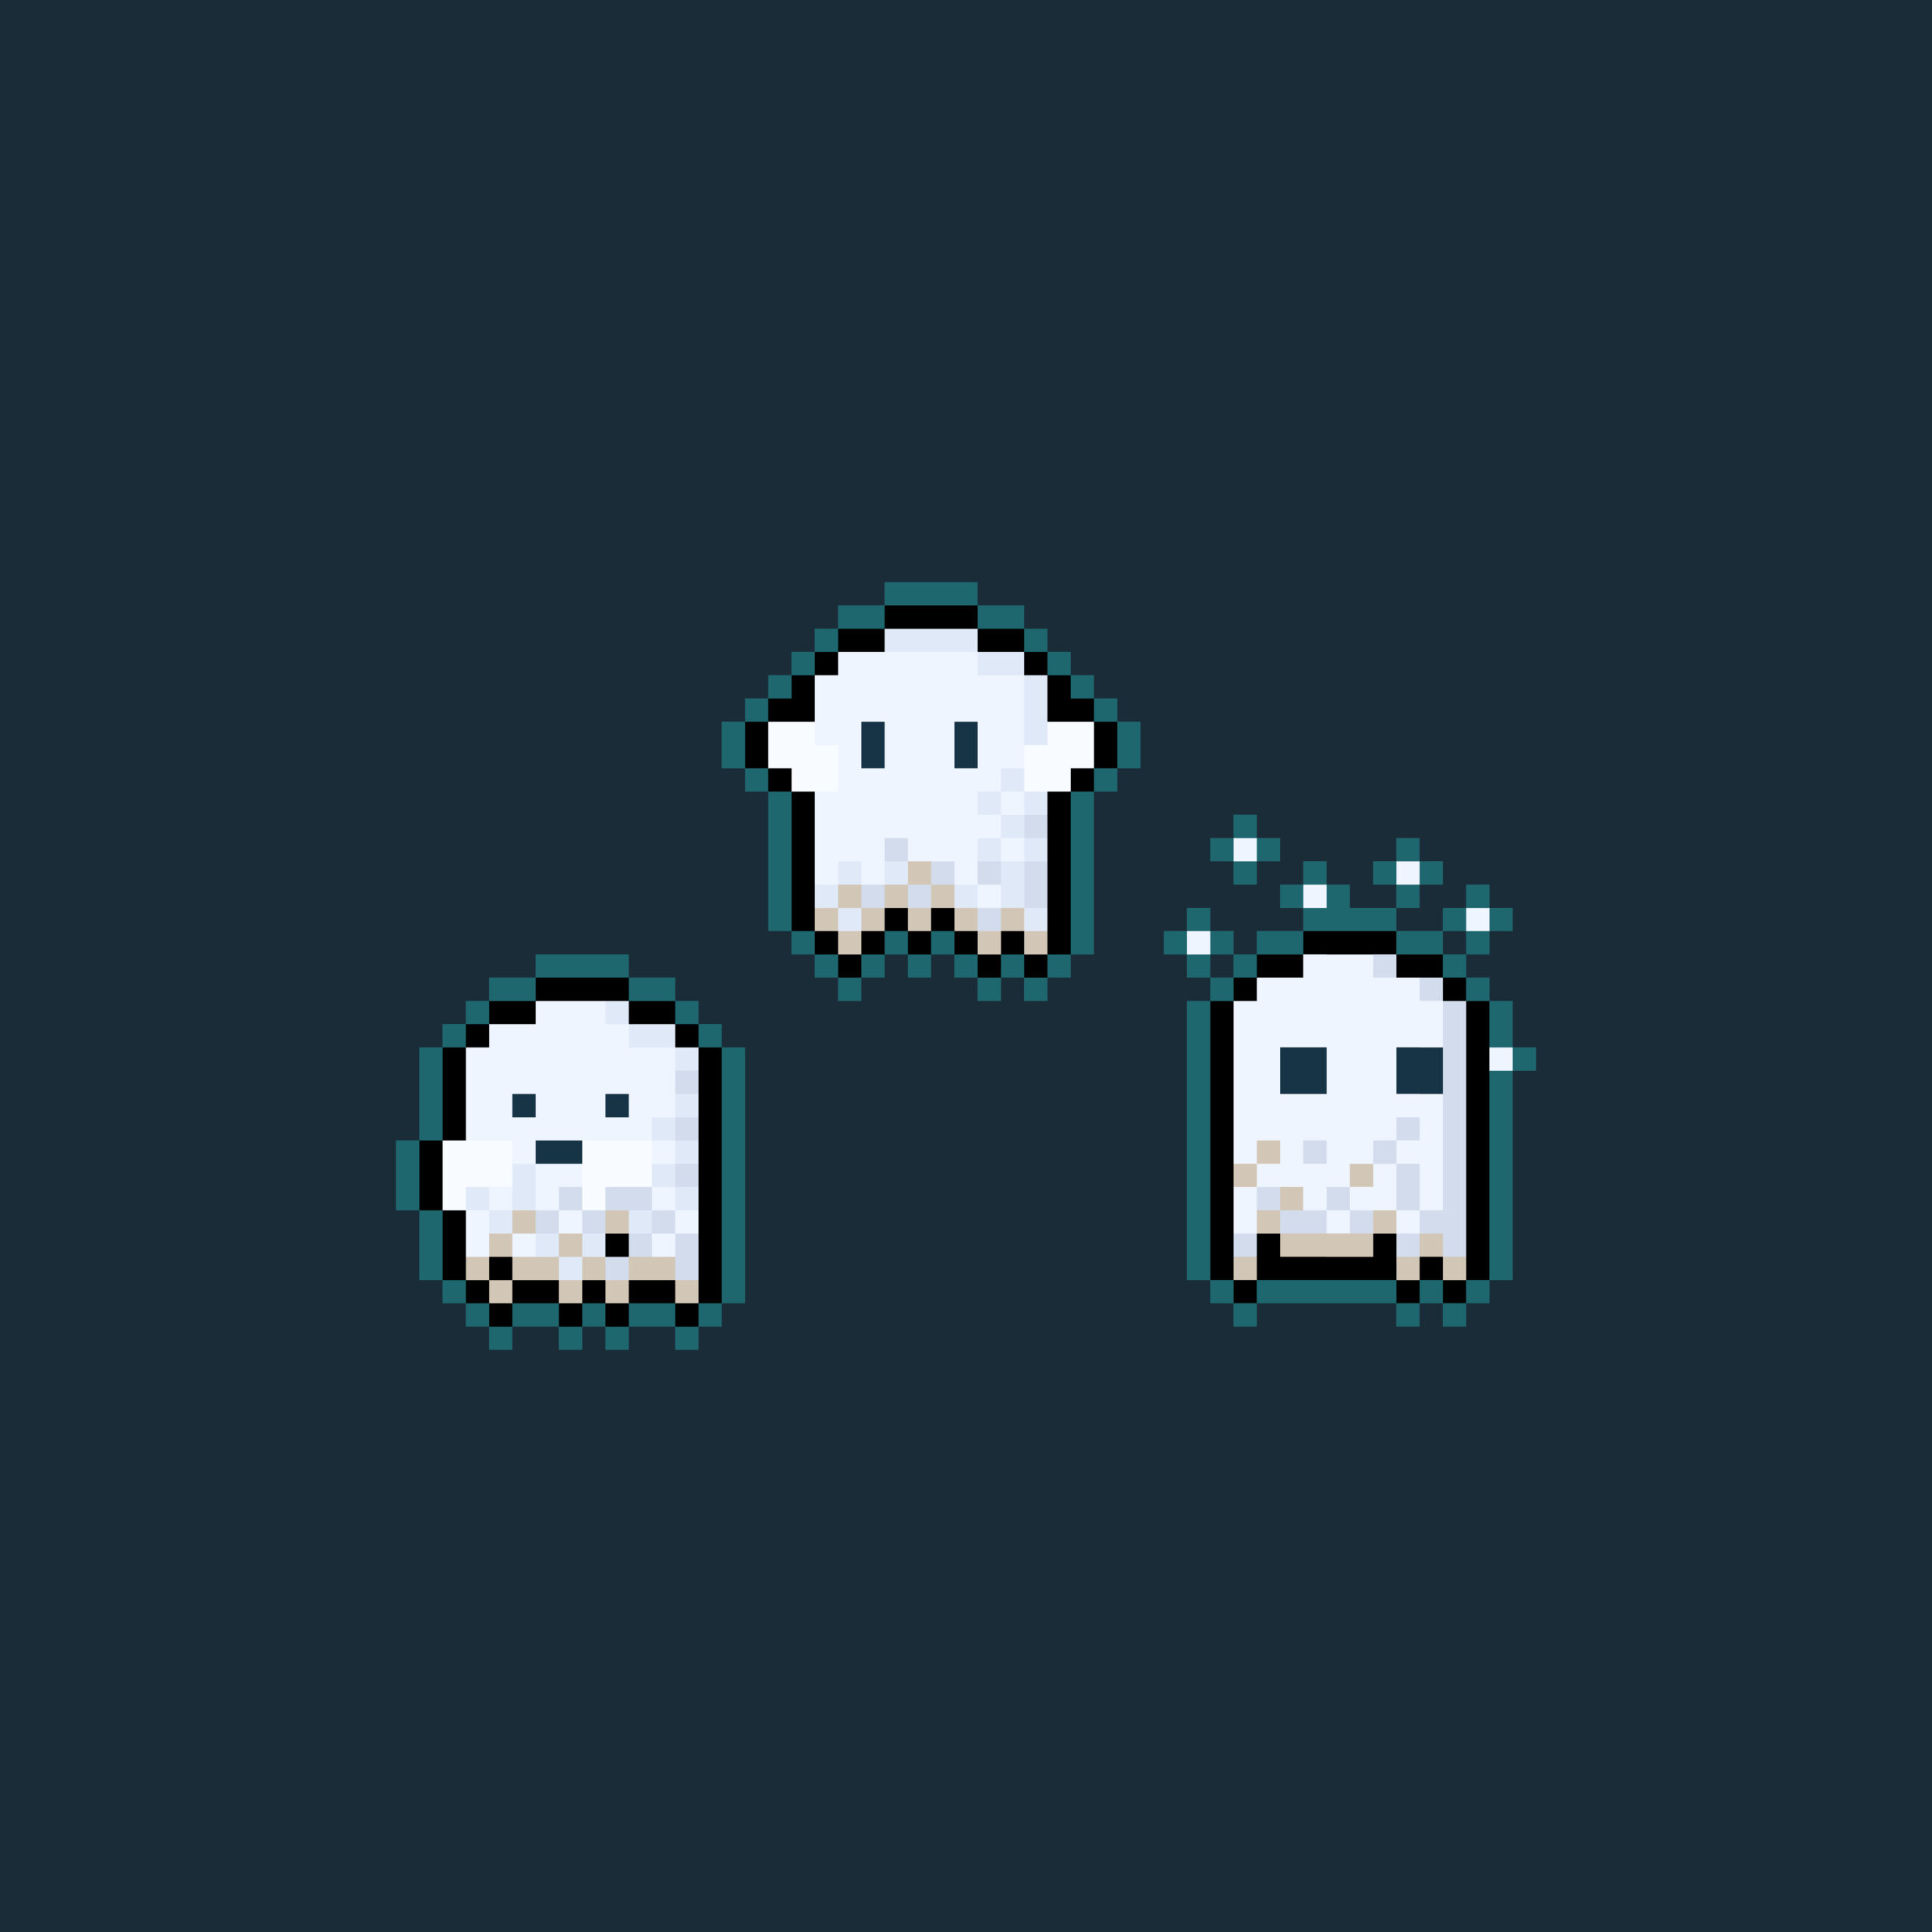 Pixel art cartoon ghost character.